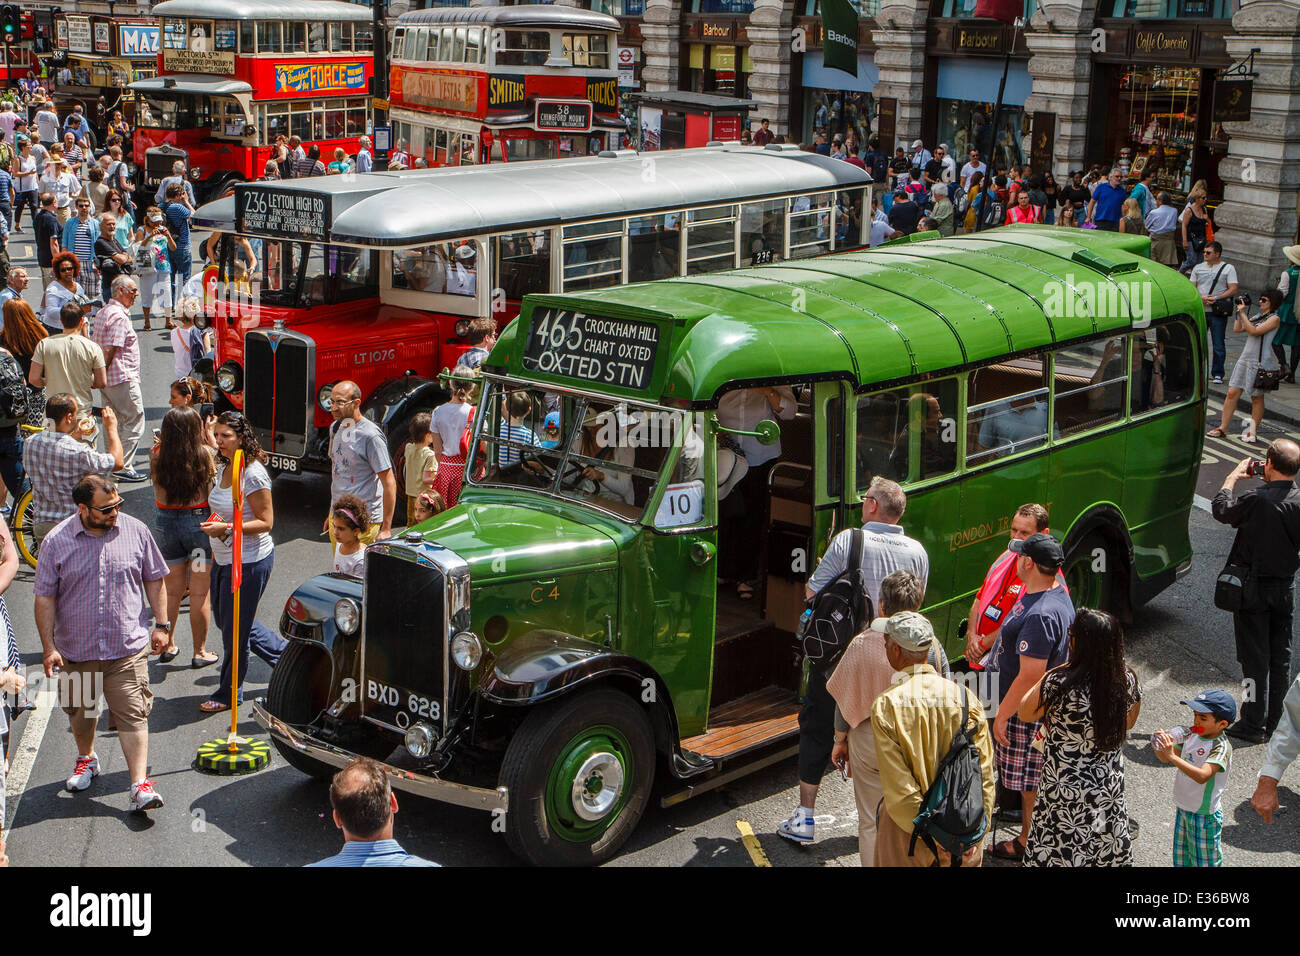 Vintage buses on display, London Stock Photo